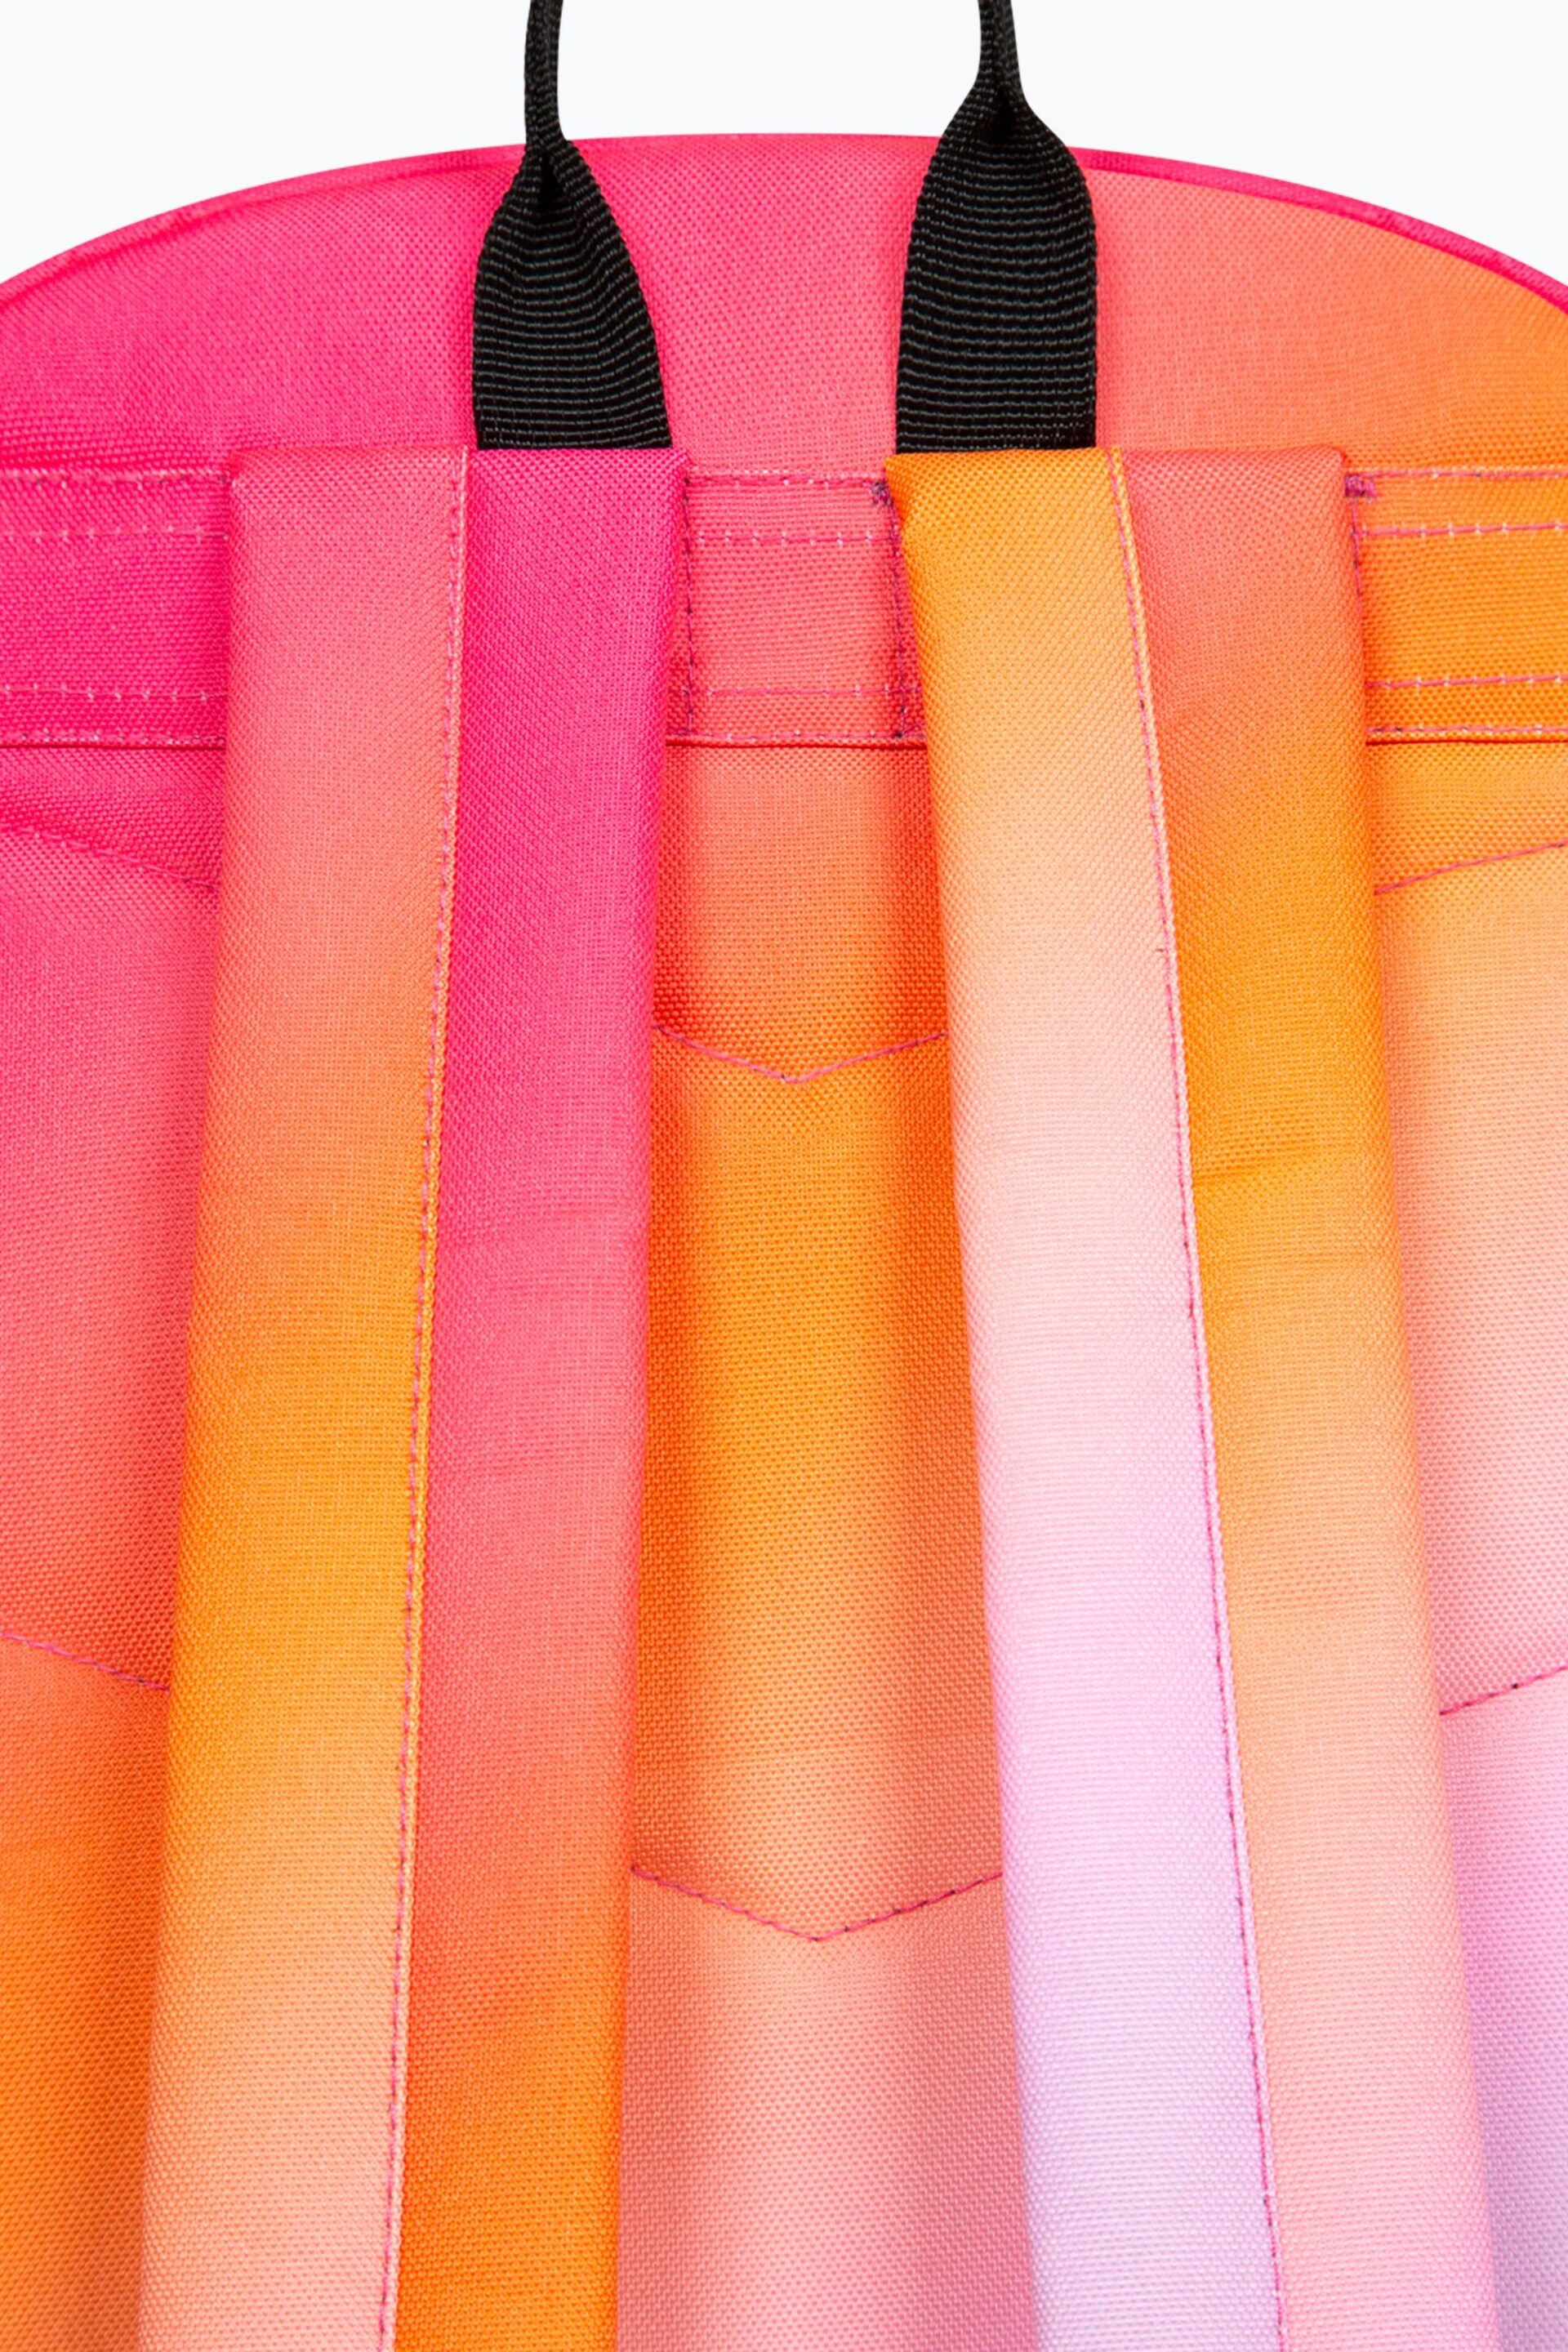 Hype. Unisex Pink Multi Gradient Badge Backpack - Image 12 of 13